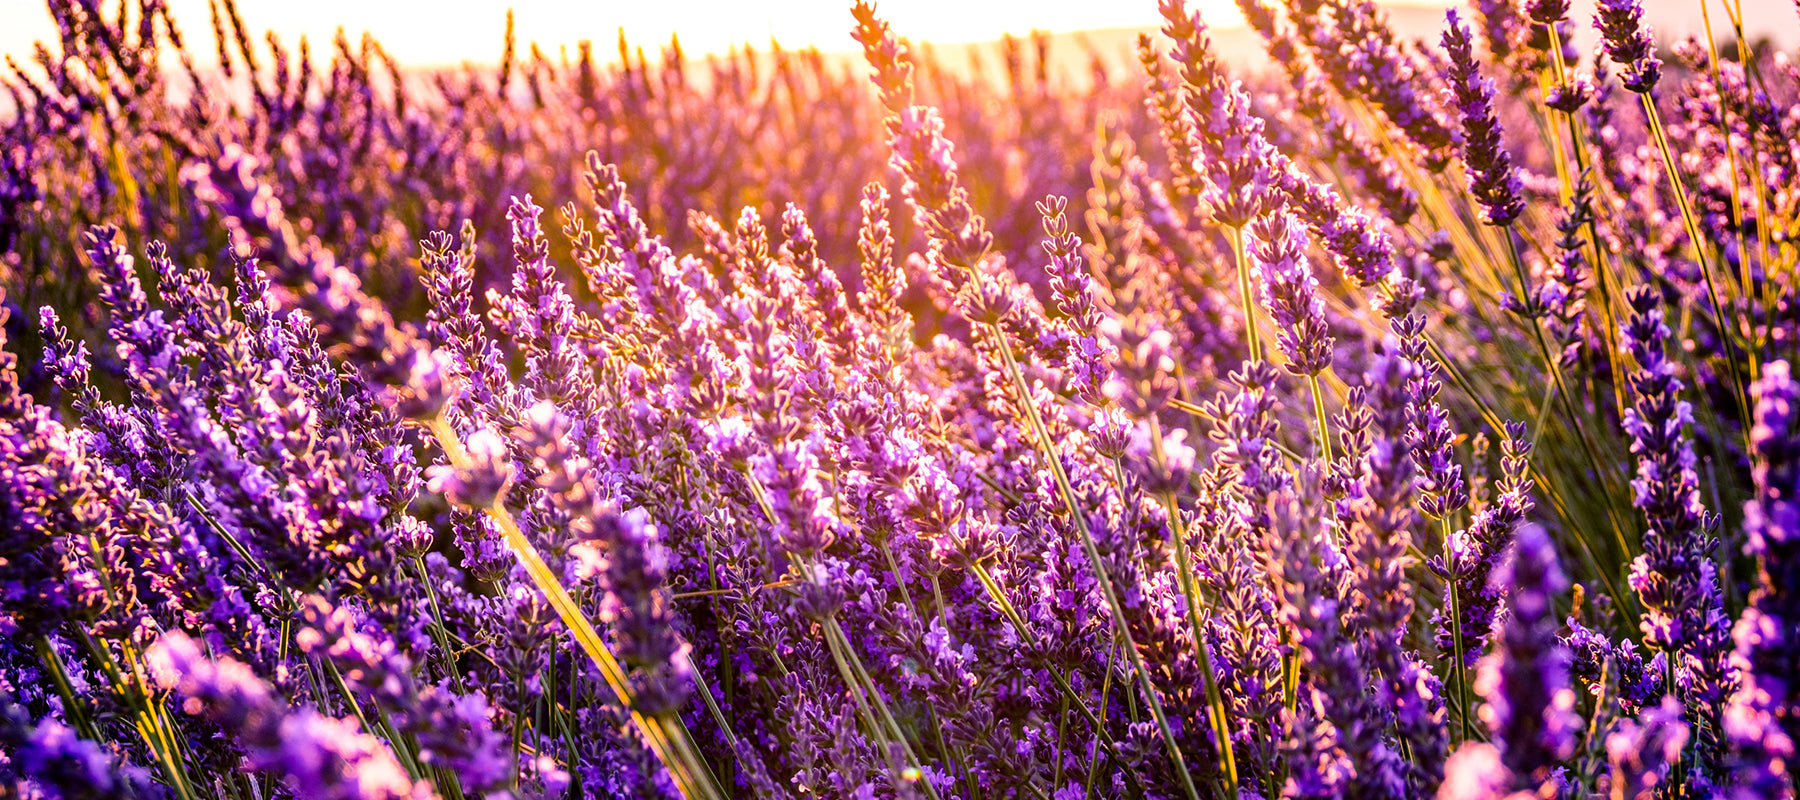 Image of lavender flowers in field